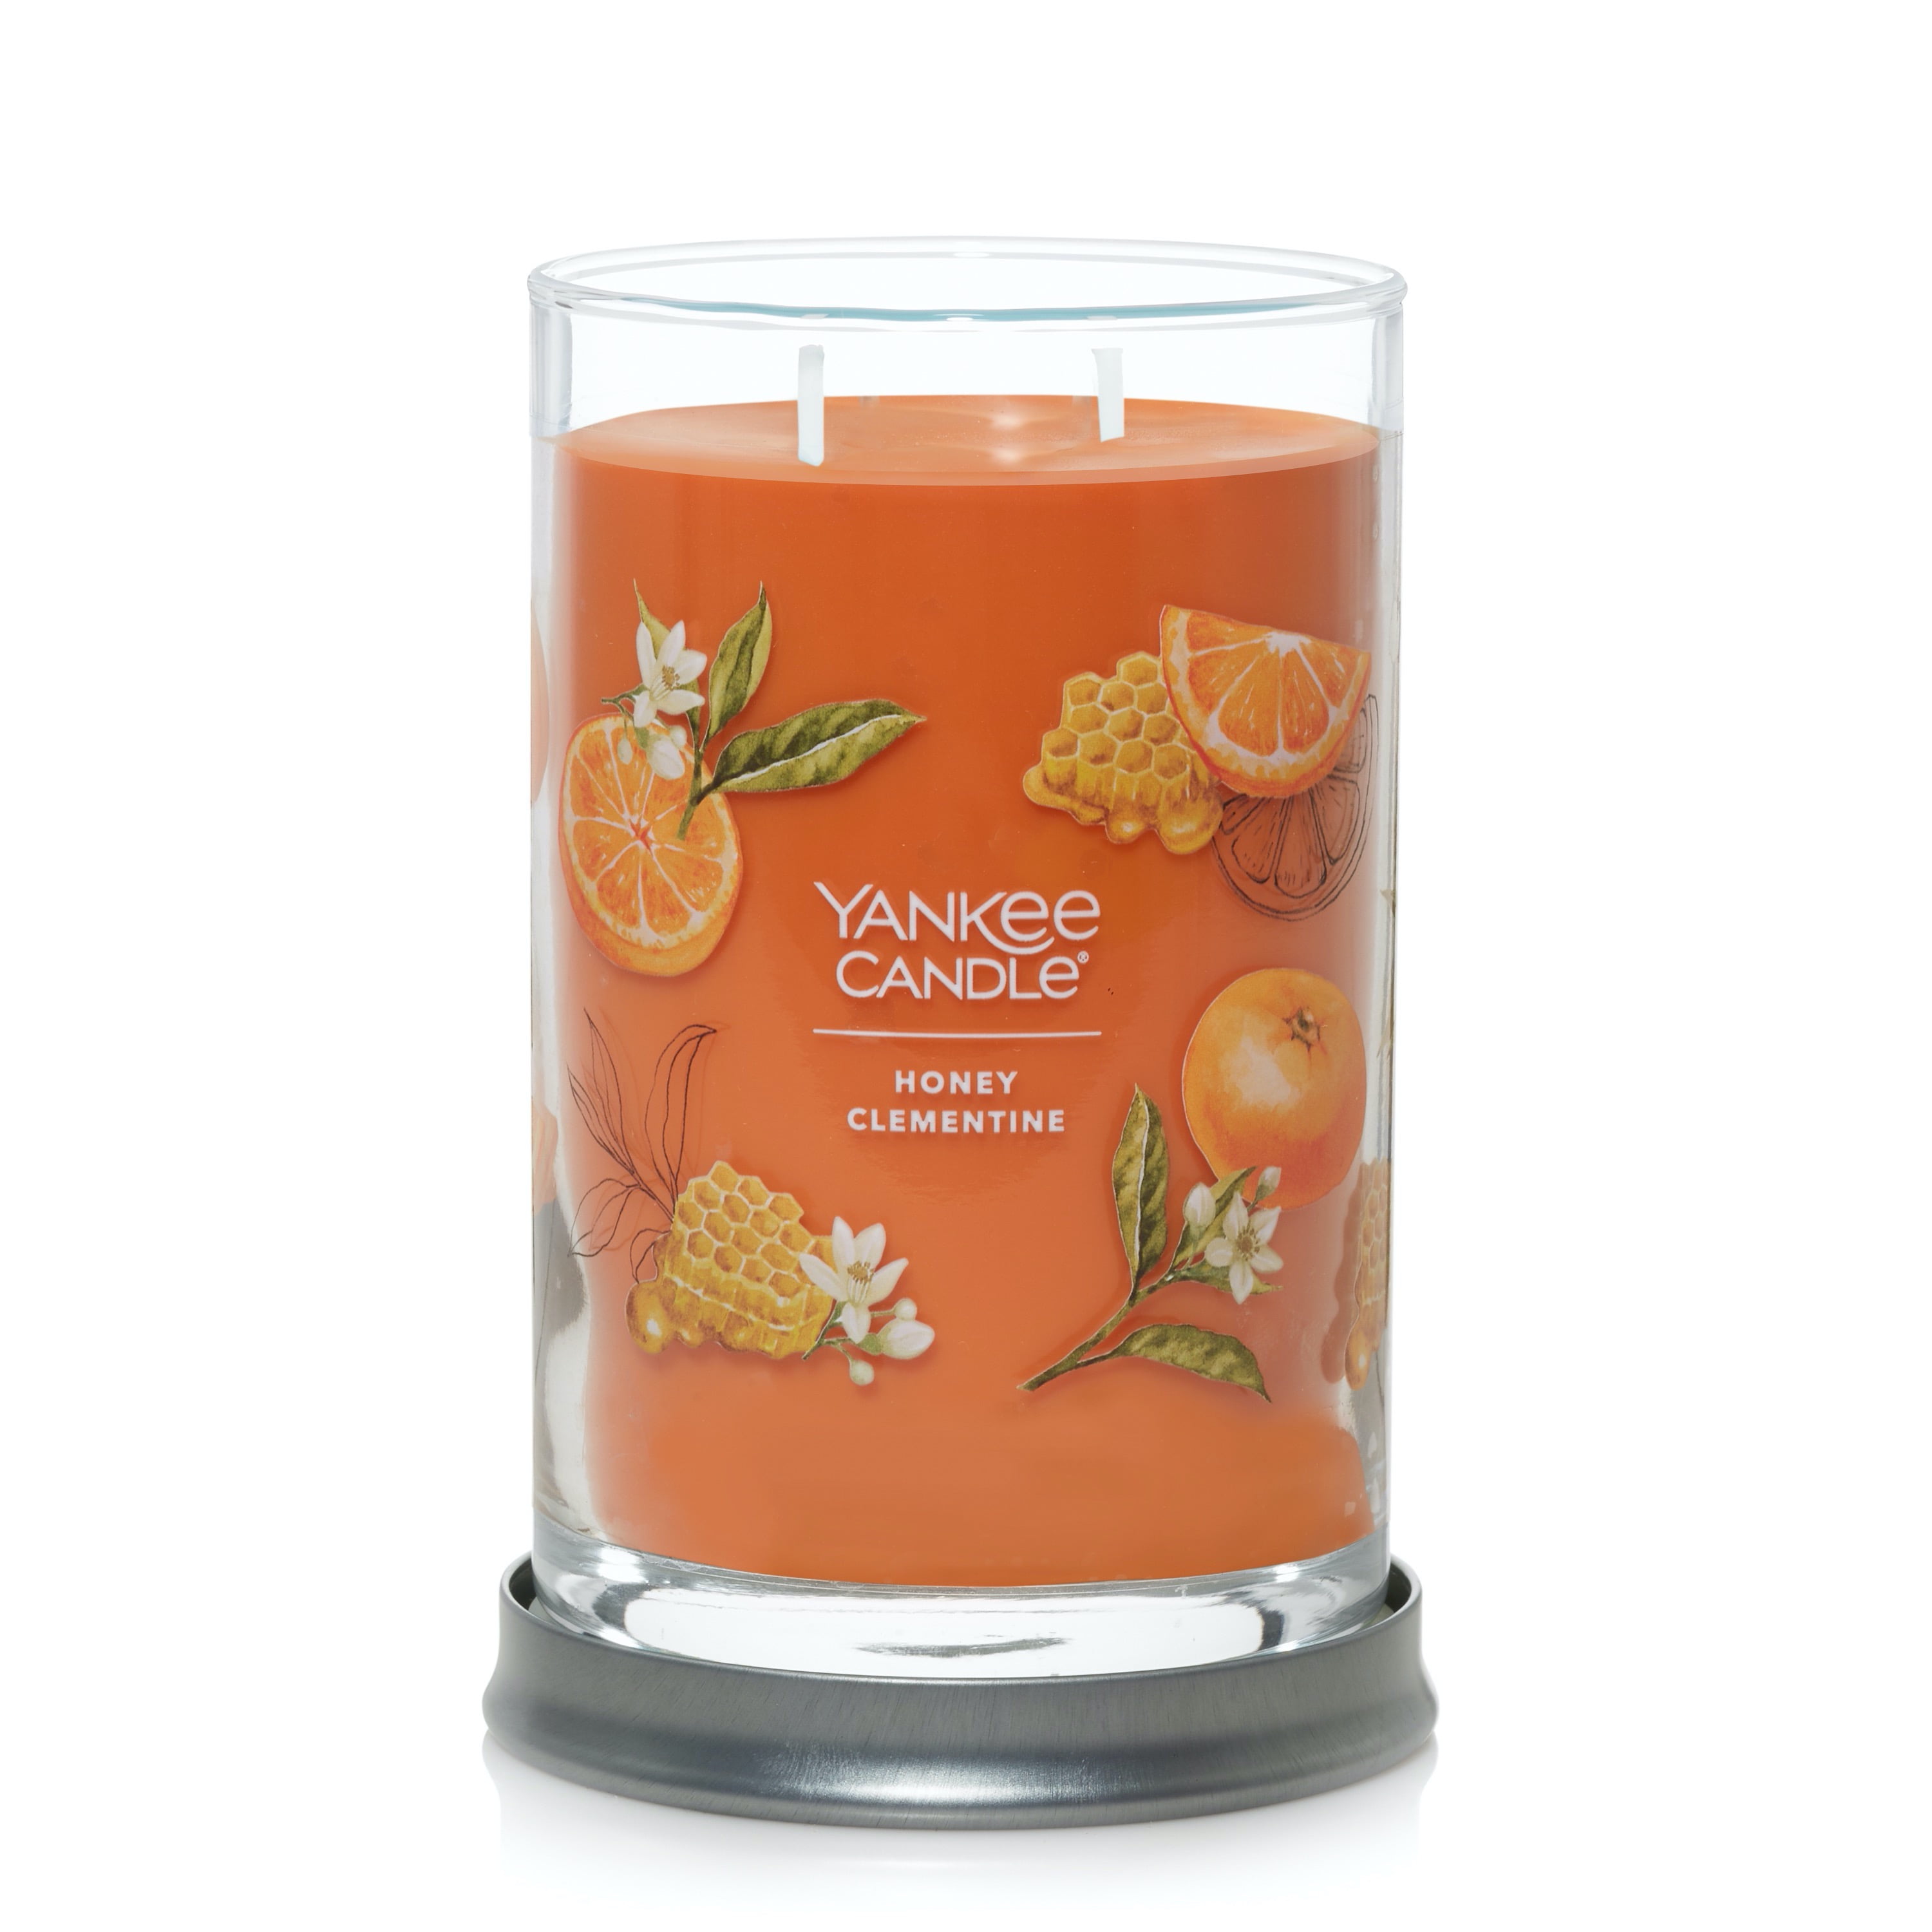 Yankee Candle Honey Clementine Home Fragrance Oil .33 oz each - x3  886860455705 on eBid United States